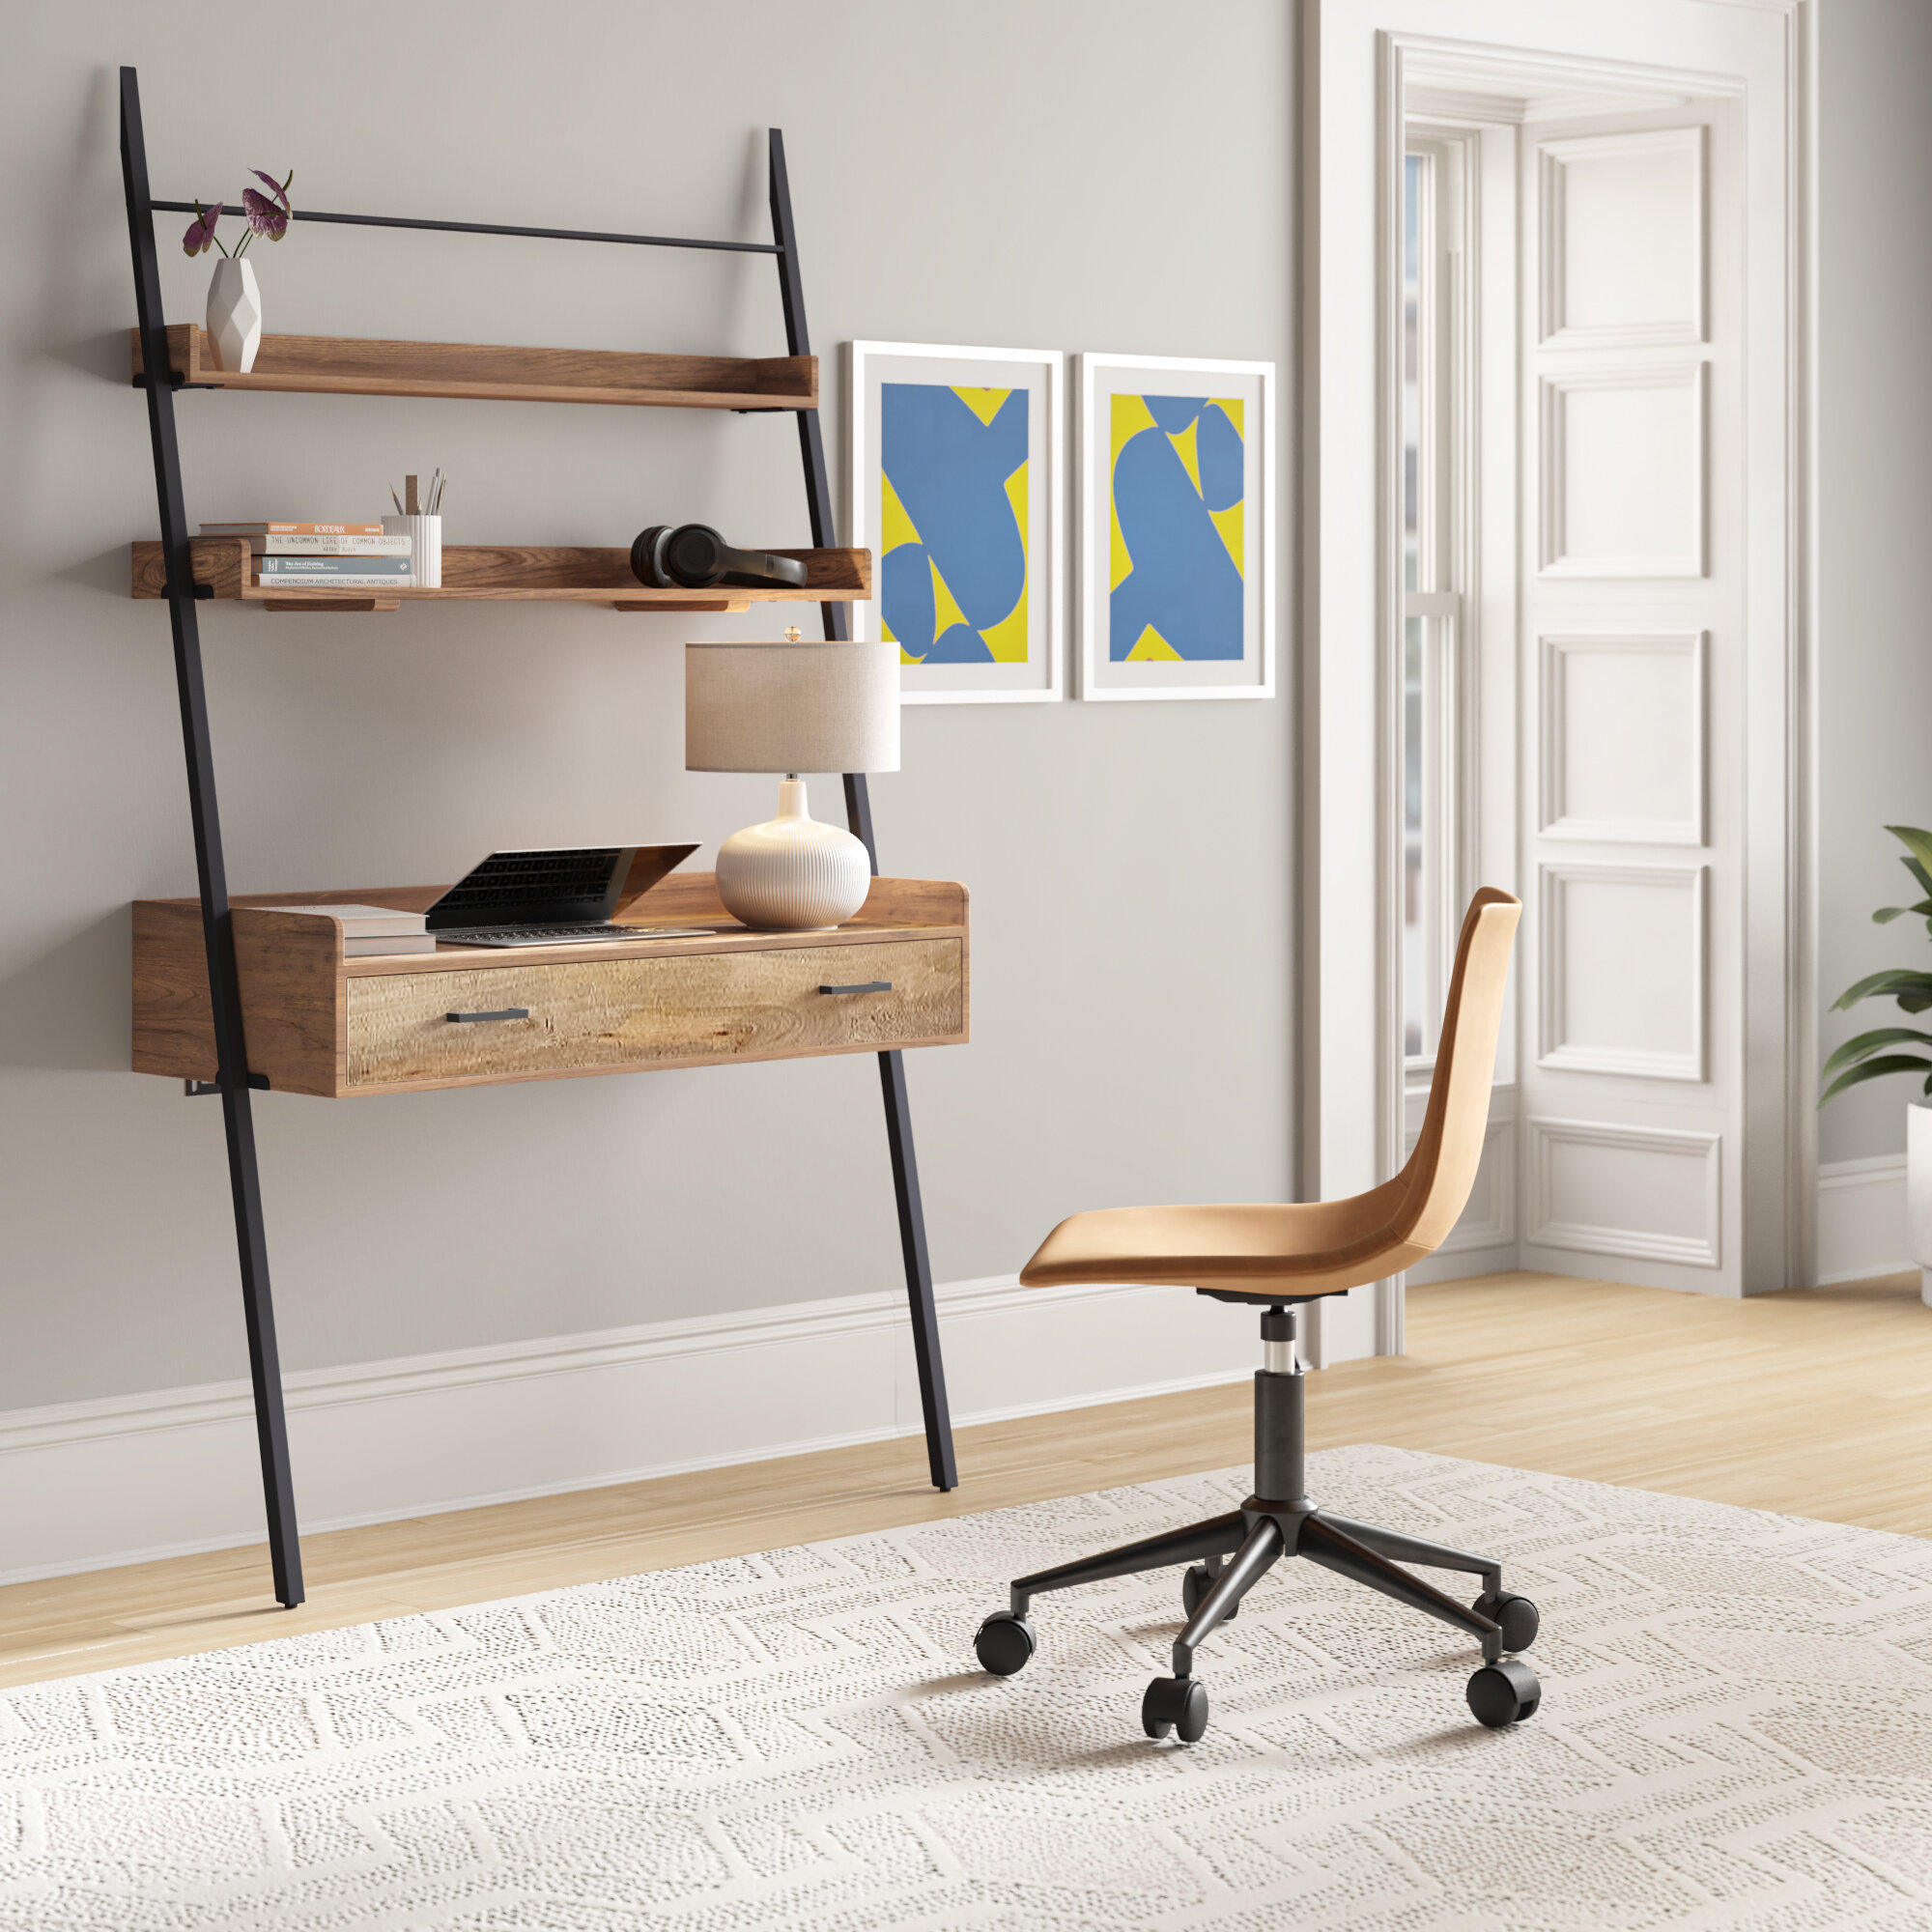 Foundstone Karamo Solid Wood Ladder Desk Reviews Wayfair